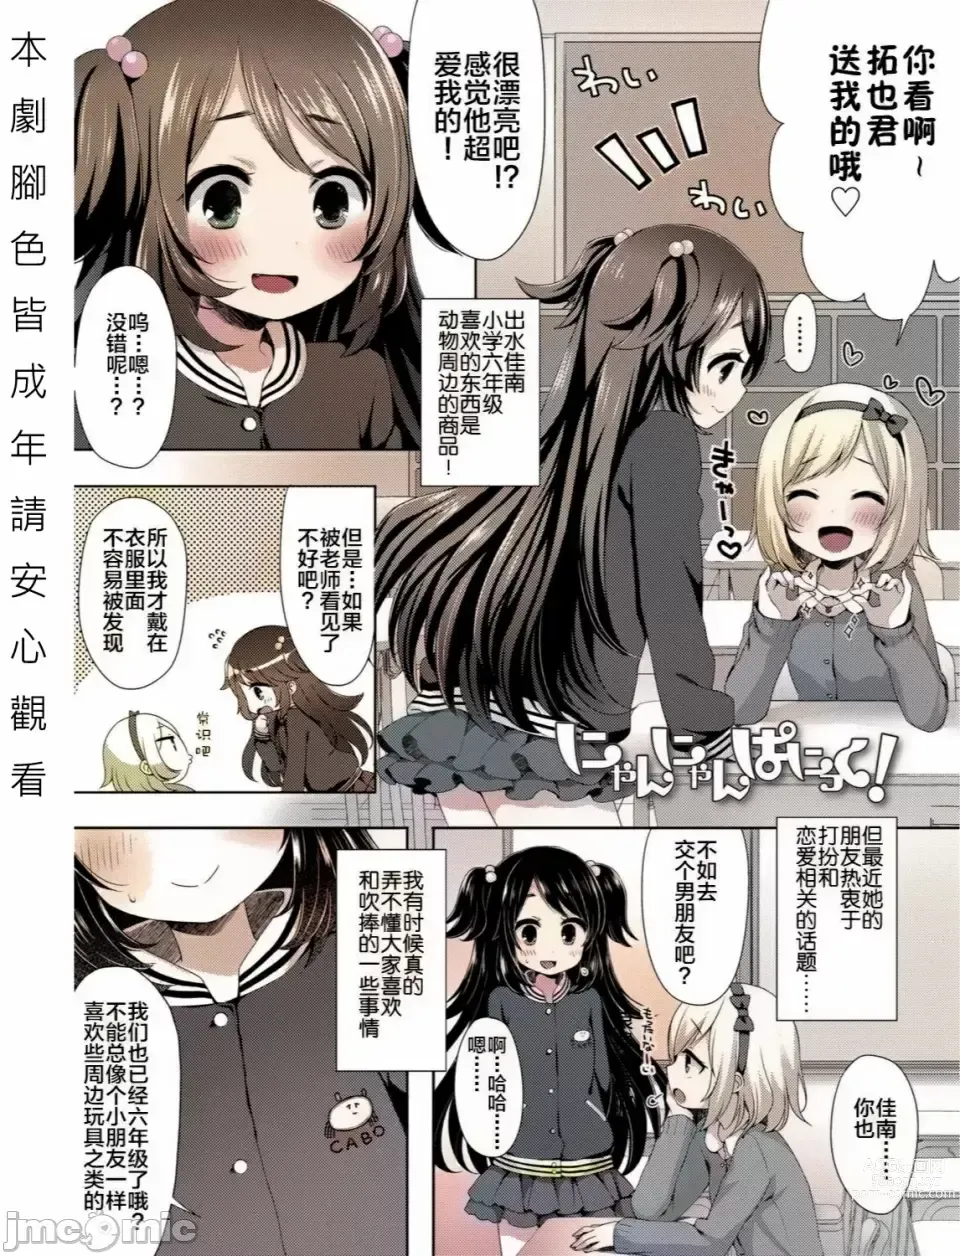 Page 2 of manga 喵喵驚喜!